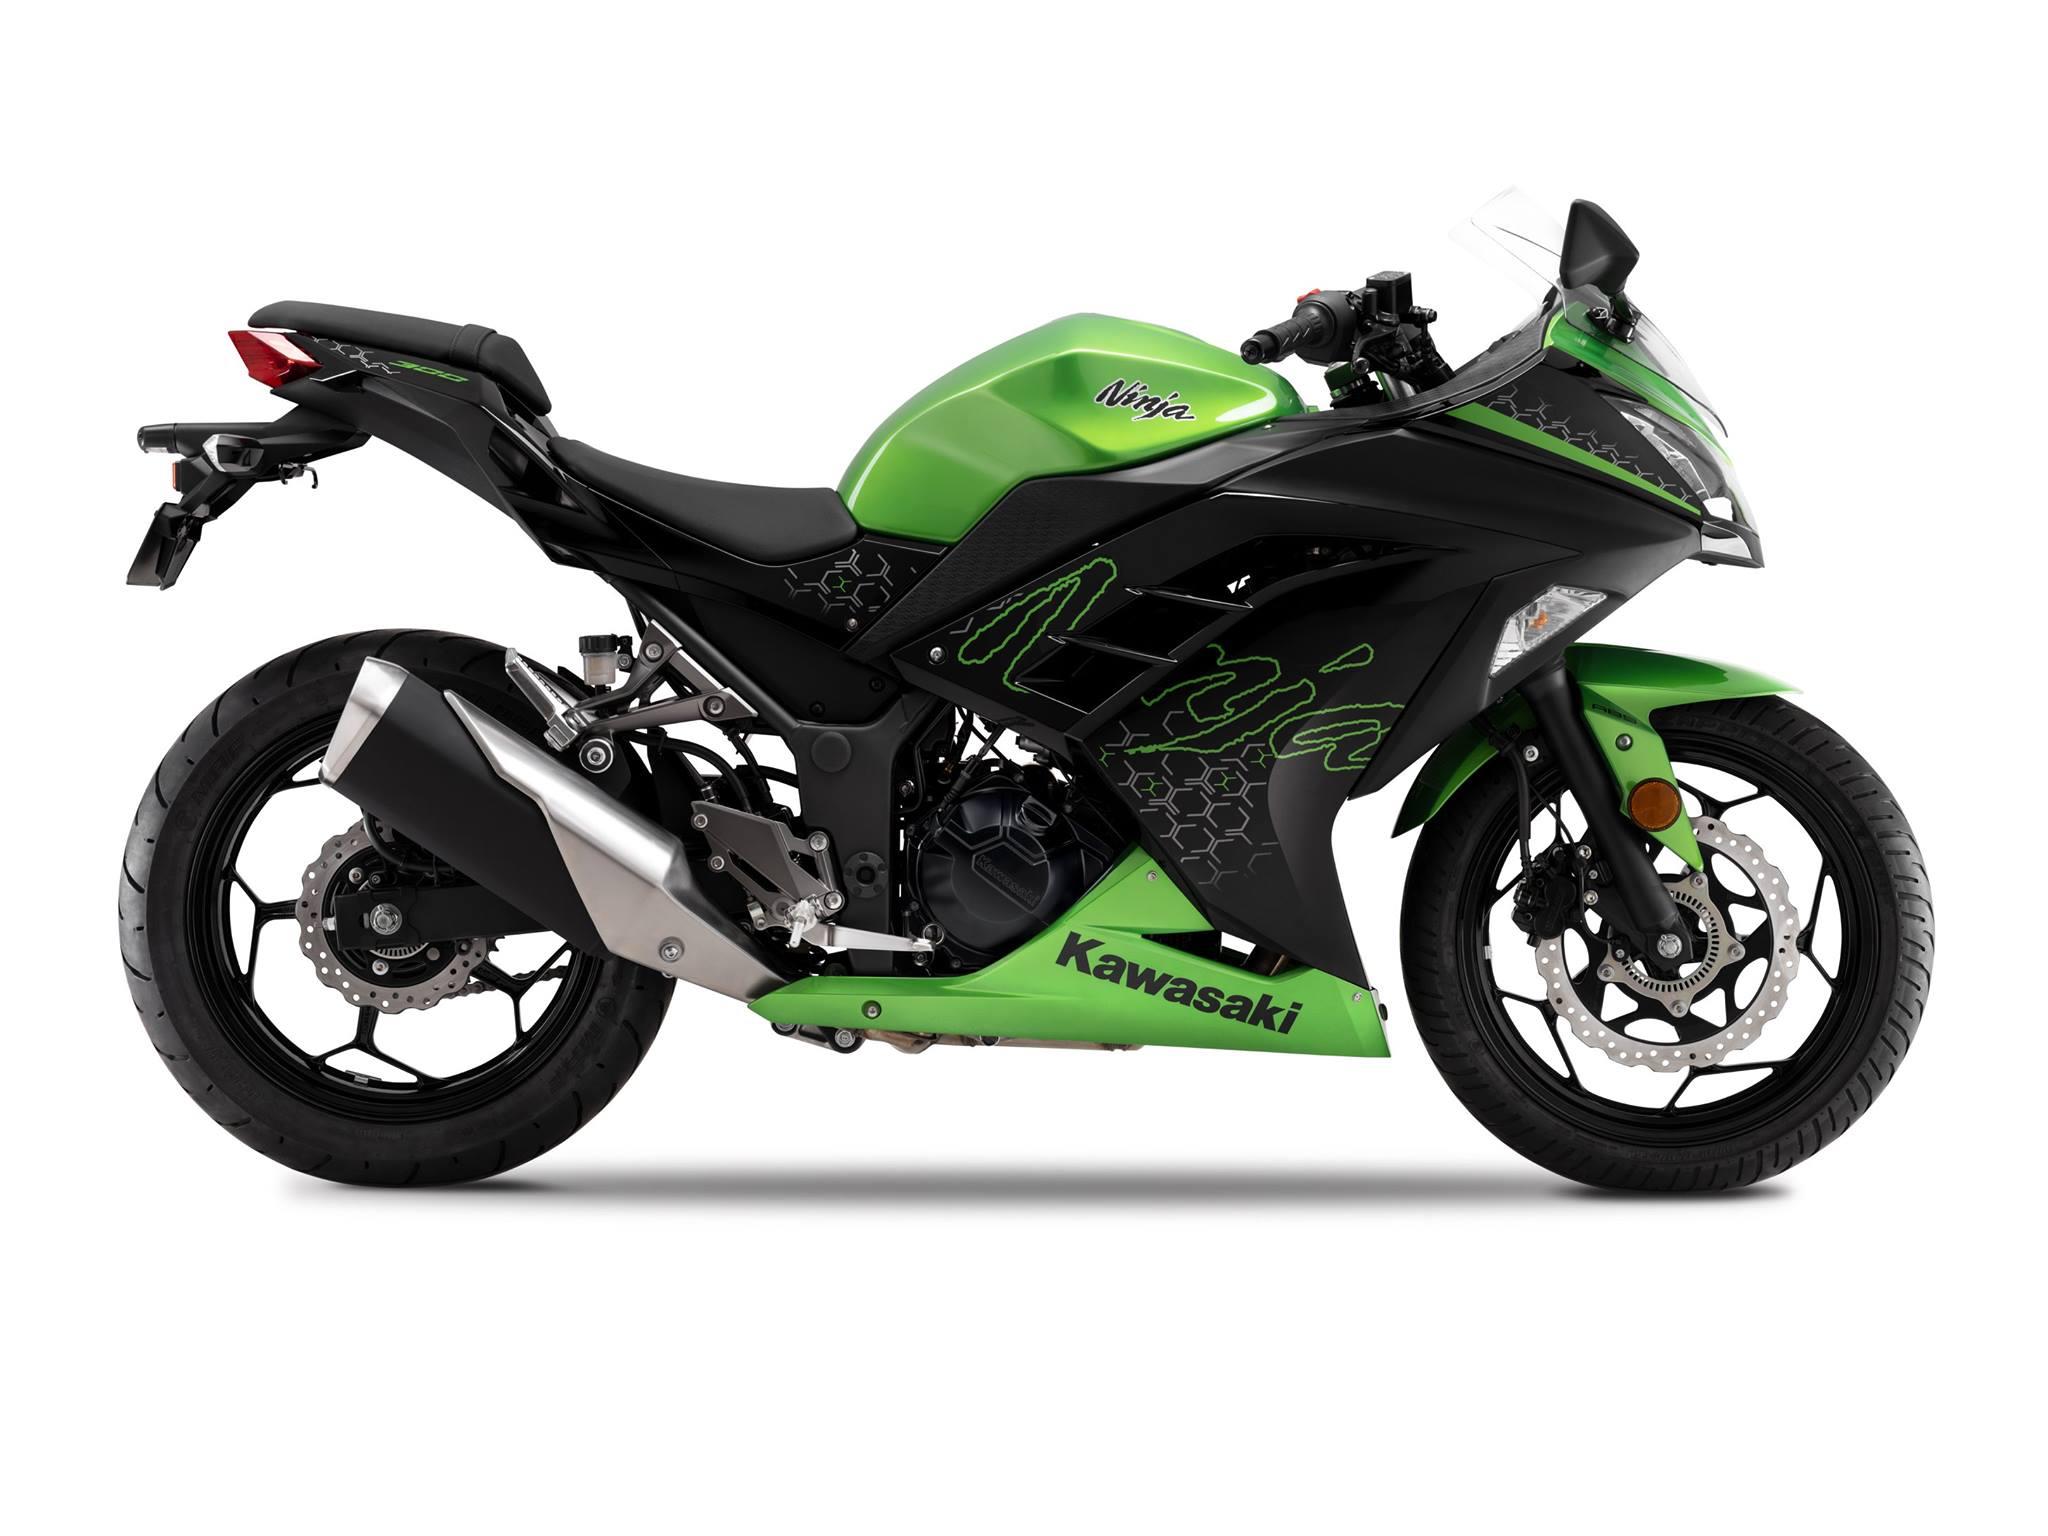 2022 Kawasaki Ninja 300 Top Speed & Mileage India